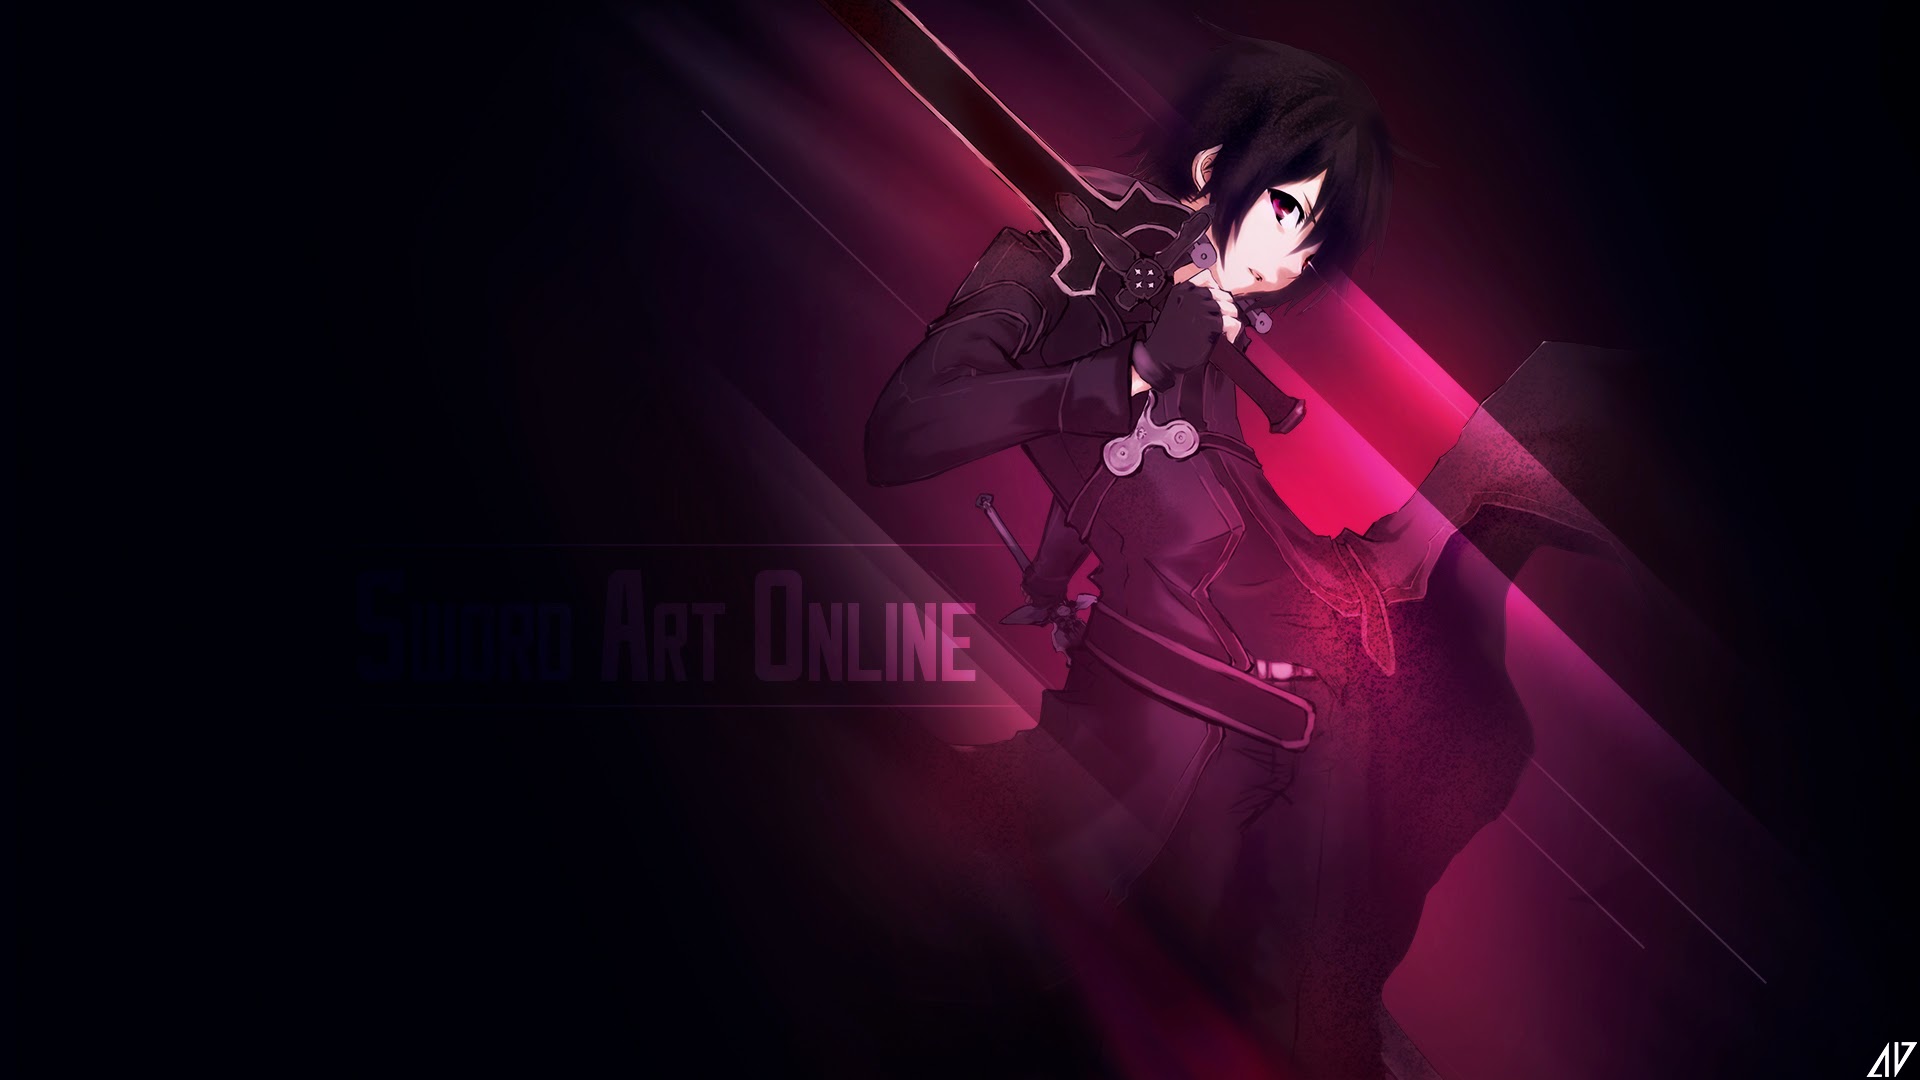 Kirito Sword Art Online Arc Anime HD Wallpaper Image Picture